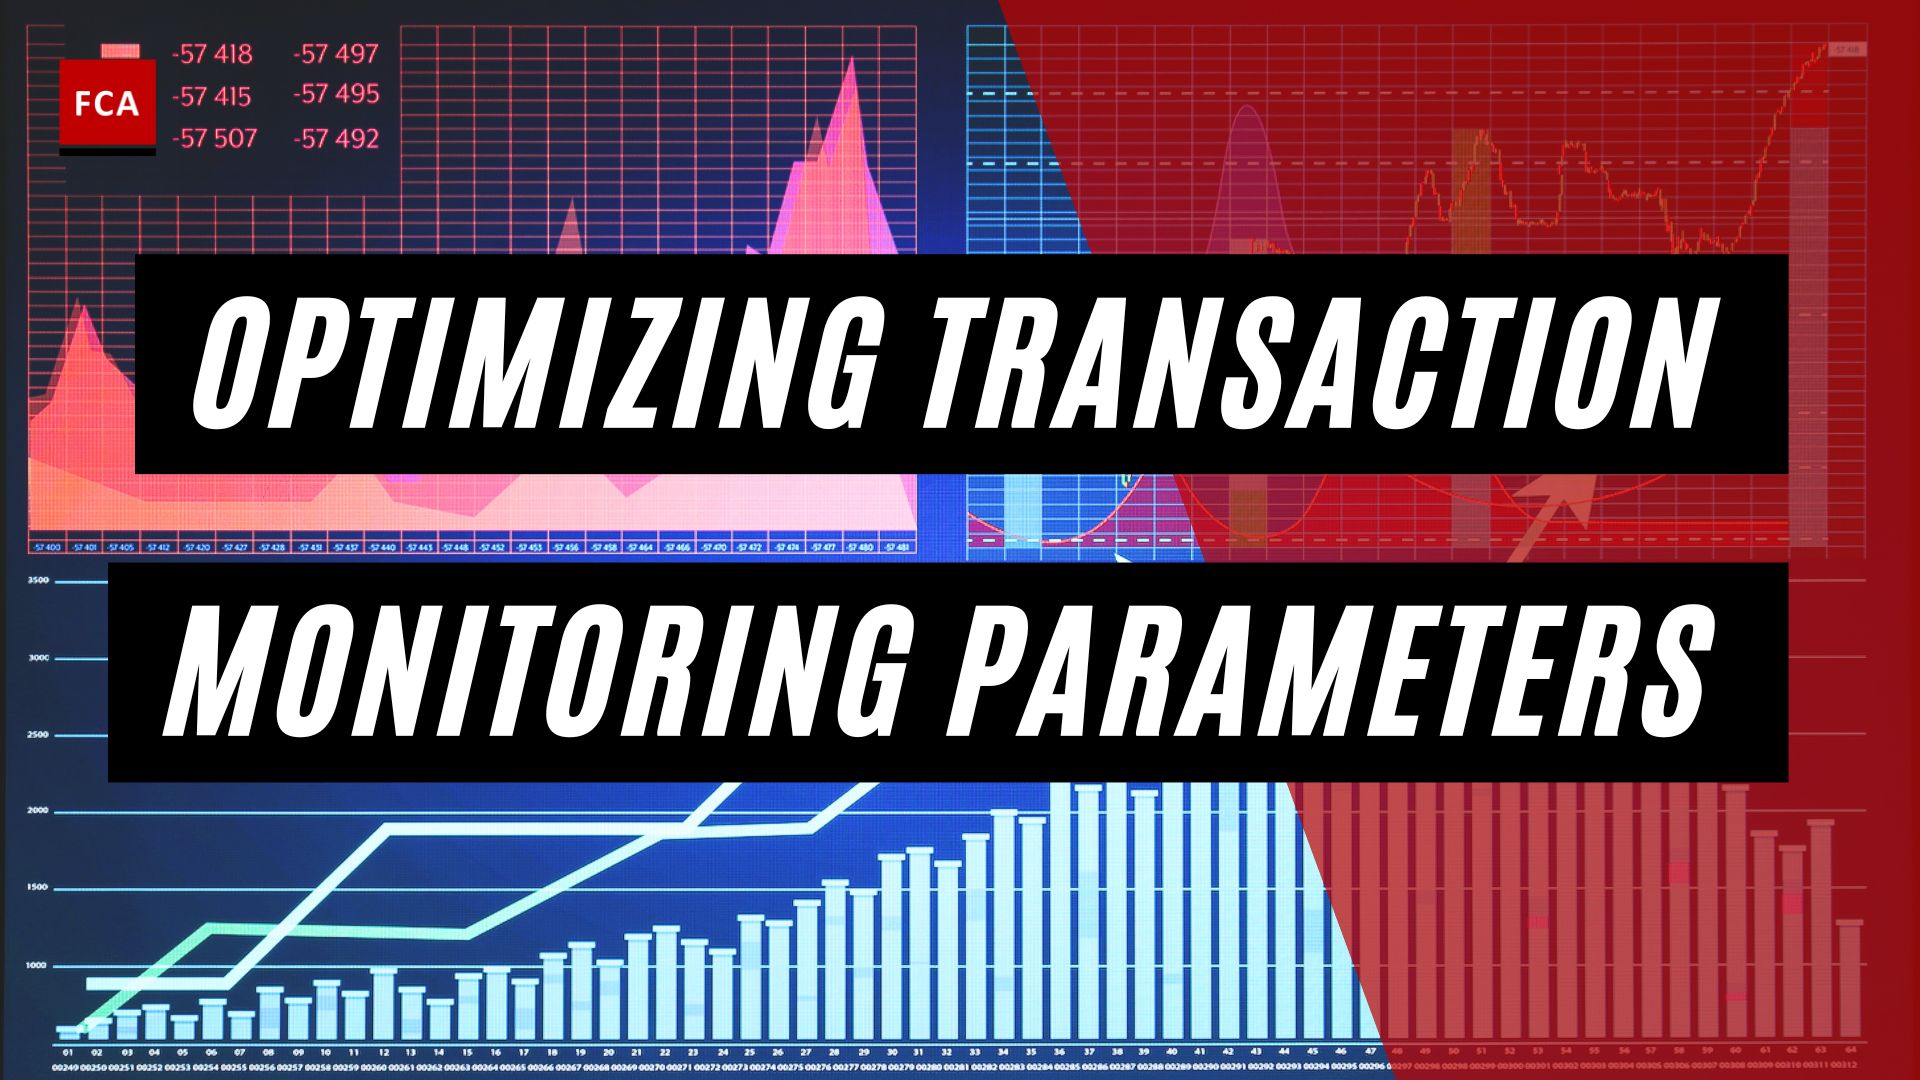 Optimizing Transaction Monitoring Parameters